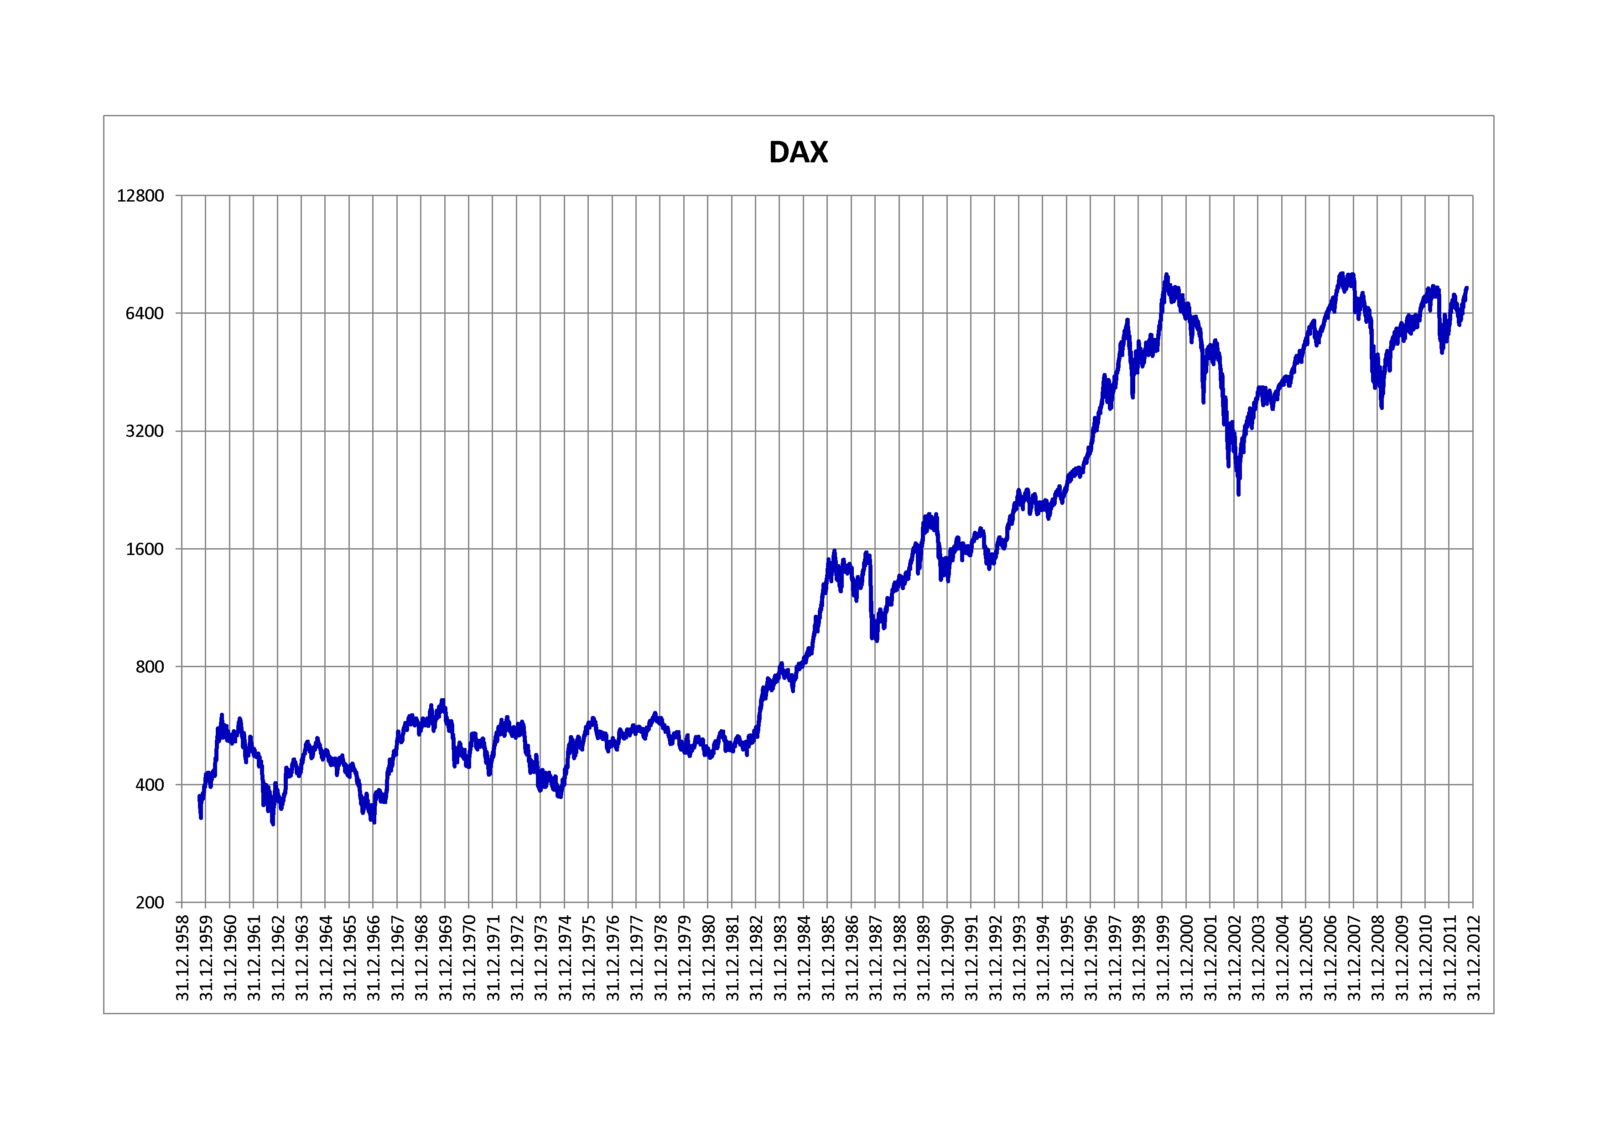 DAX график за 60 лет